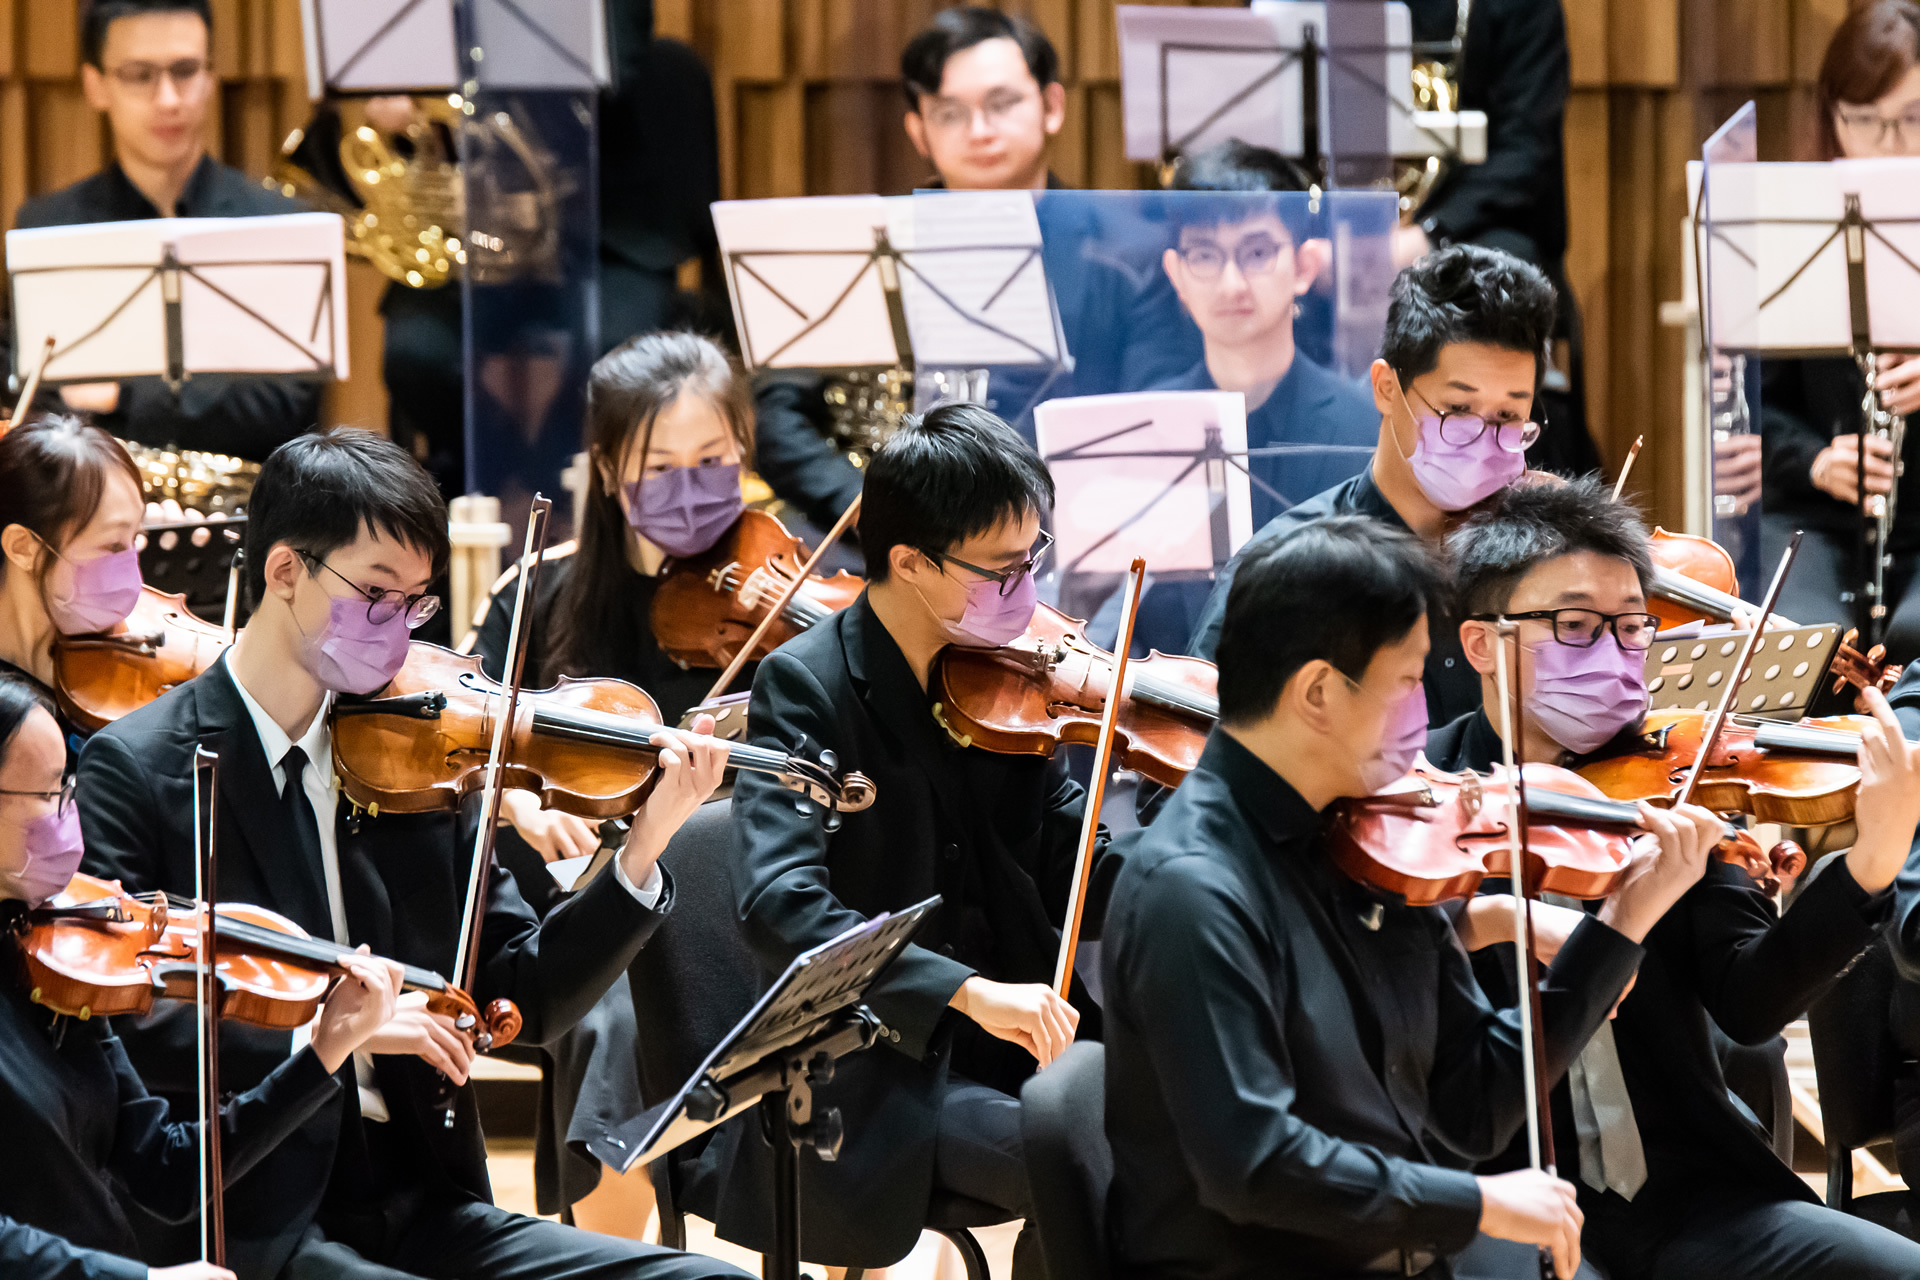 Christmas Concert by Alethia Ensemble and University Philharmonic Orchestra, HKUSTSU